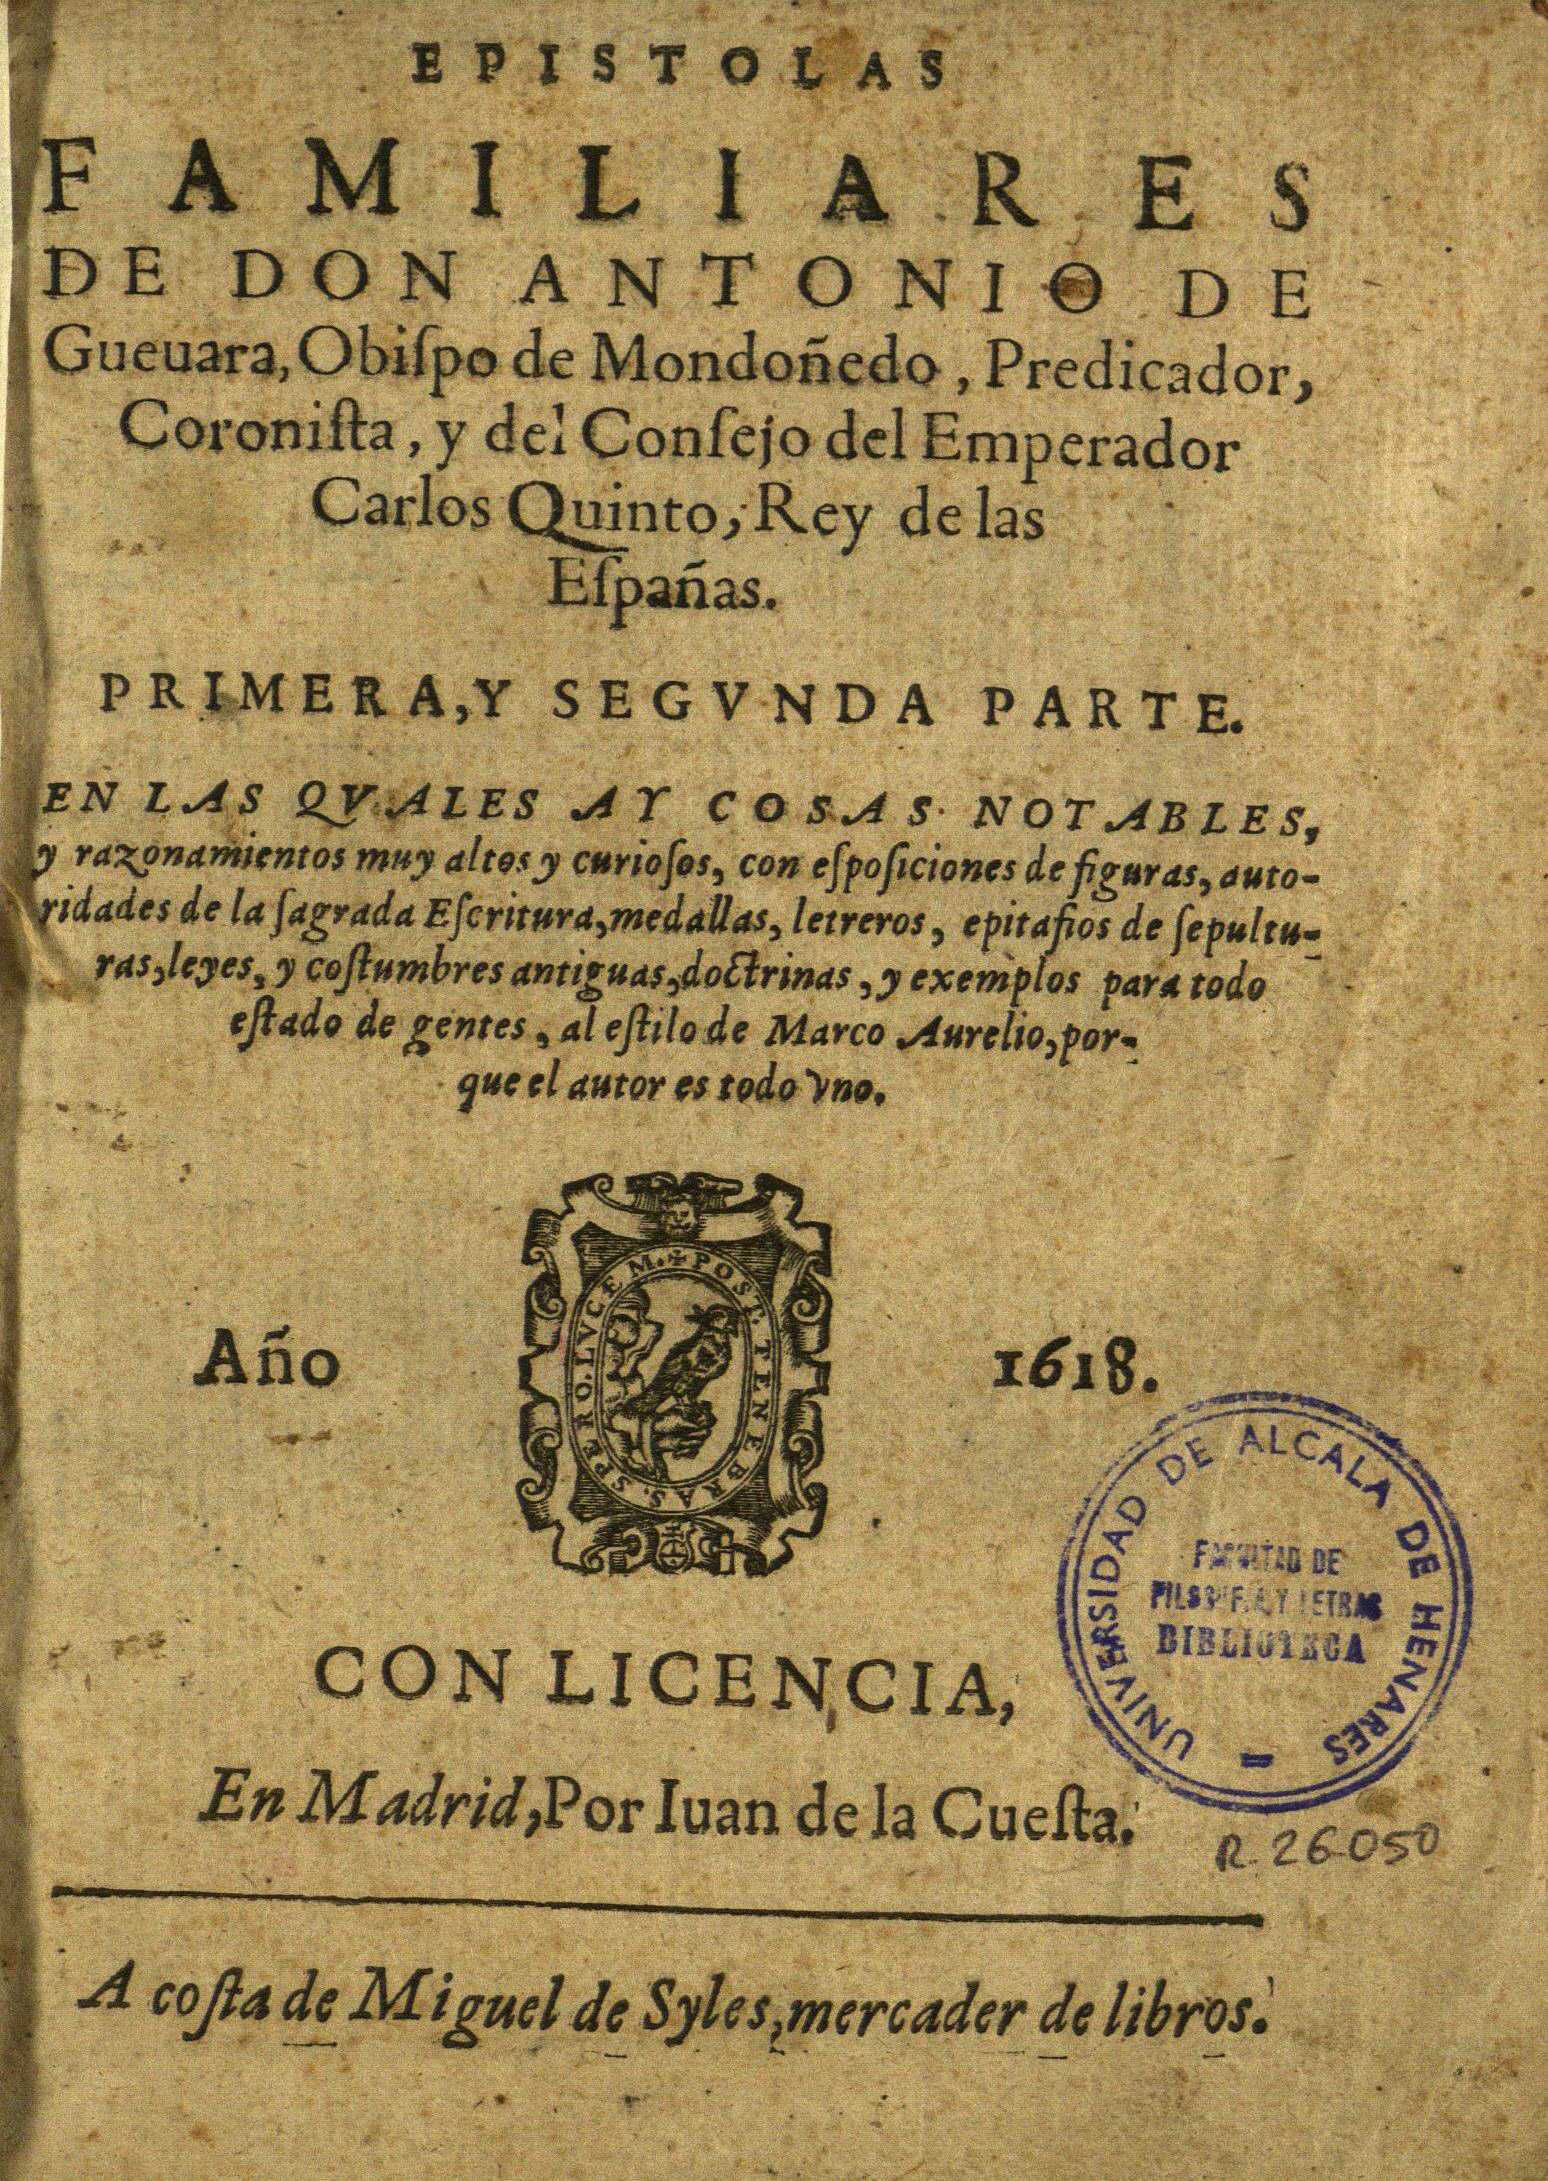 Epistolas familiares, 1618